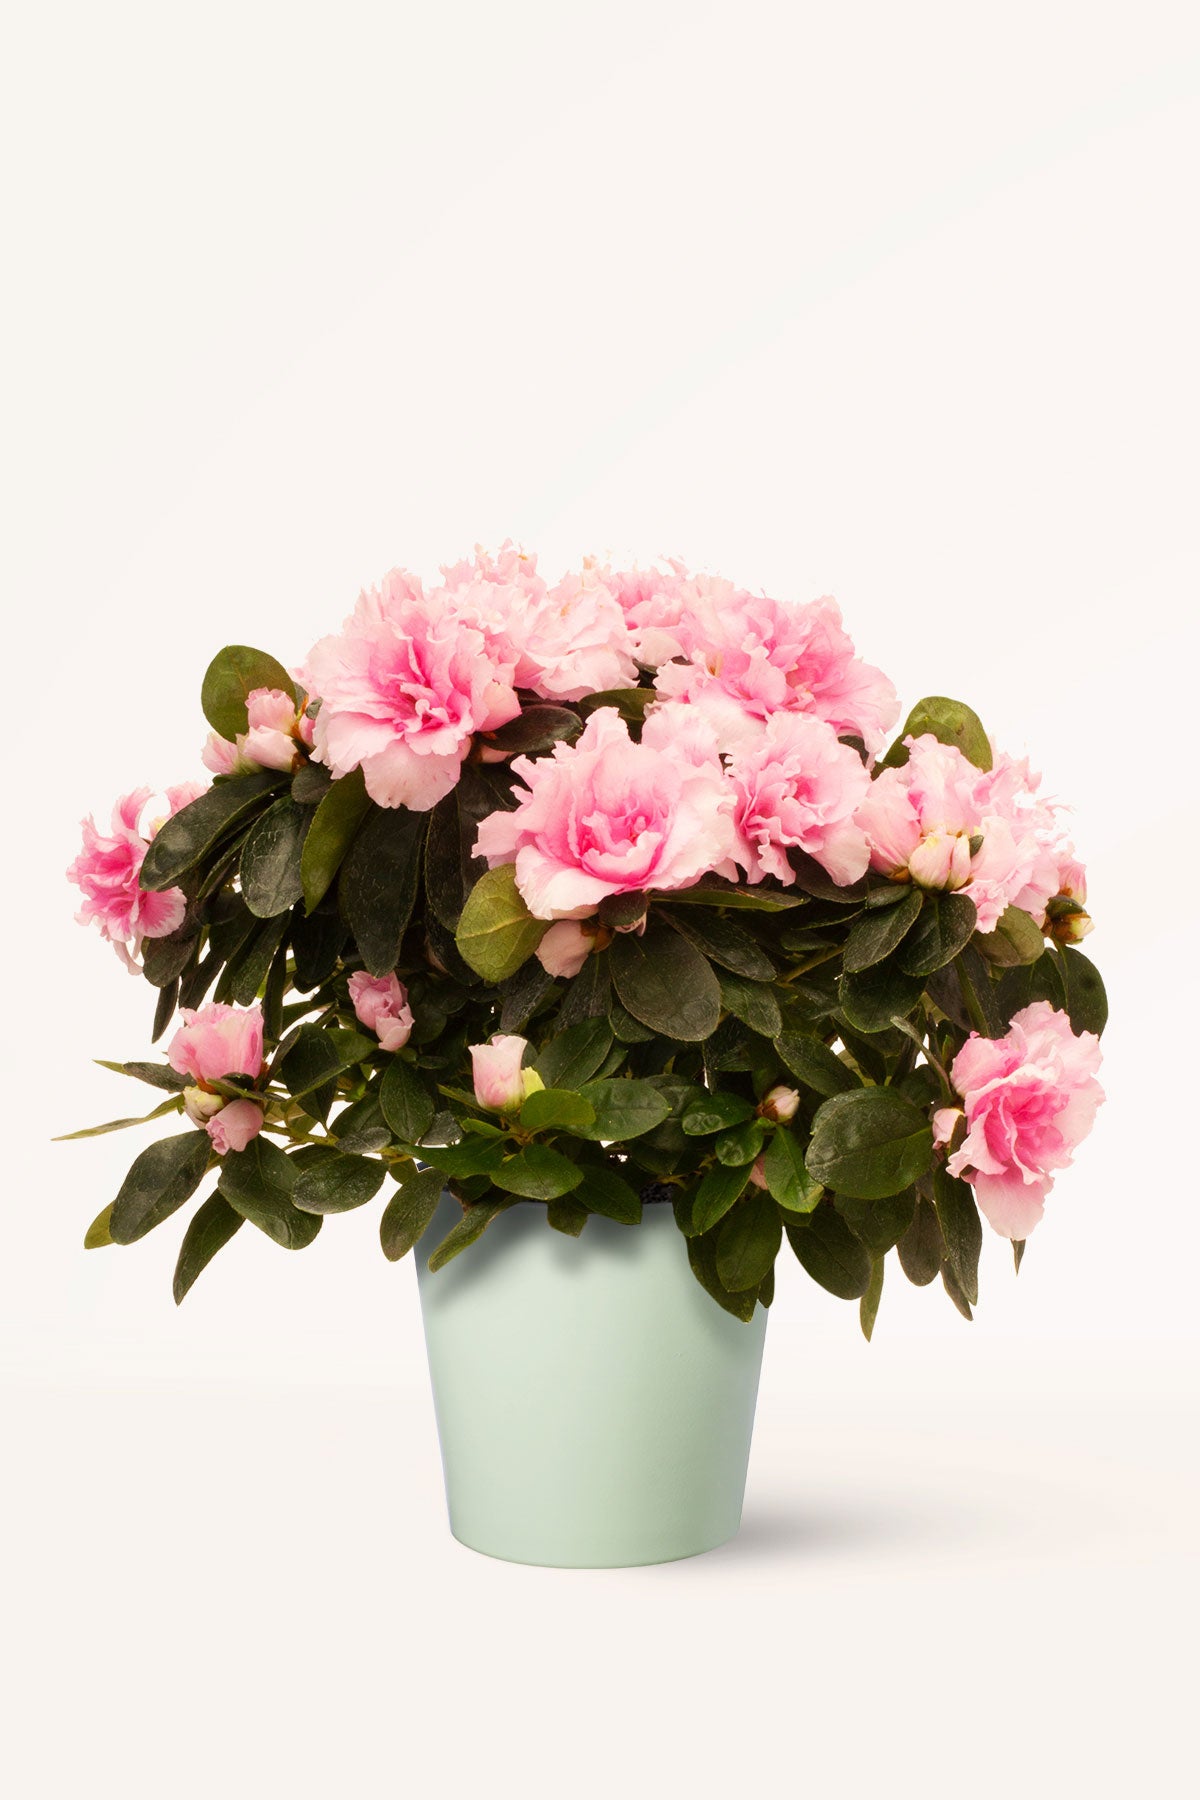 Comprar Azalea Rosa (Rhododendron) online | April Plants | APRILPLANTS